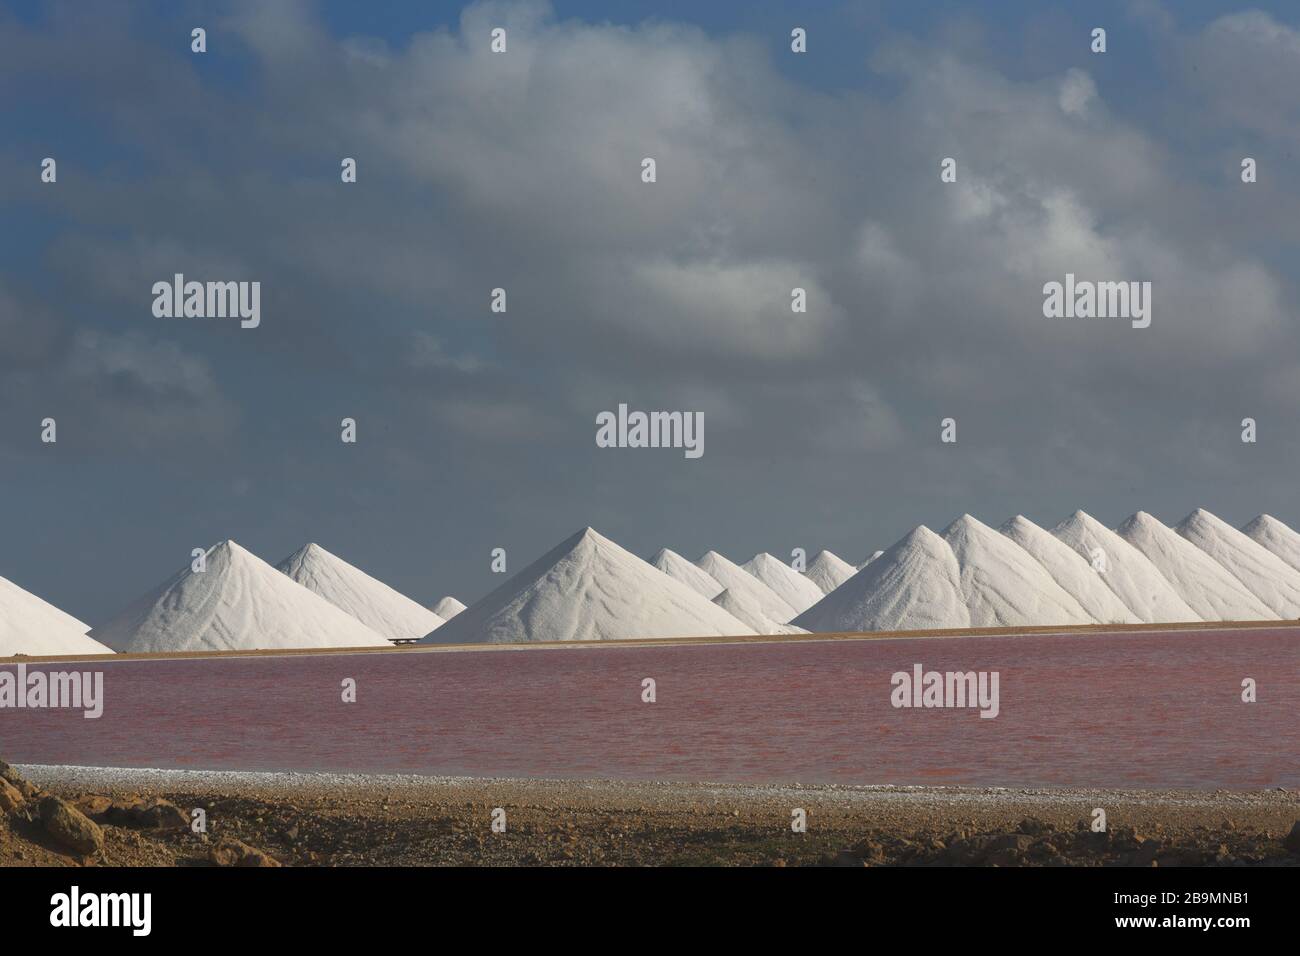 Sea salt mining operation on the Caribbean Island of Bonaire Stock Photo